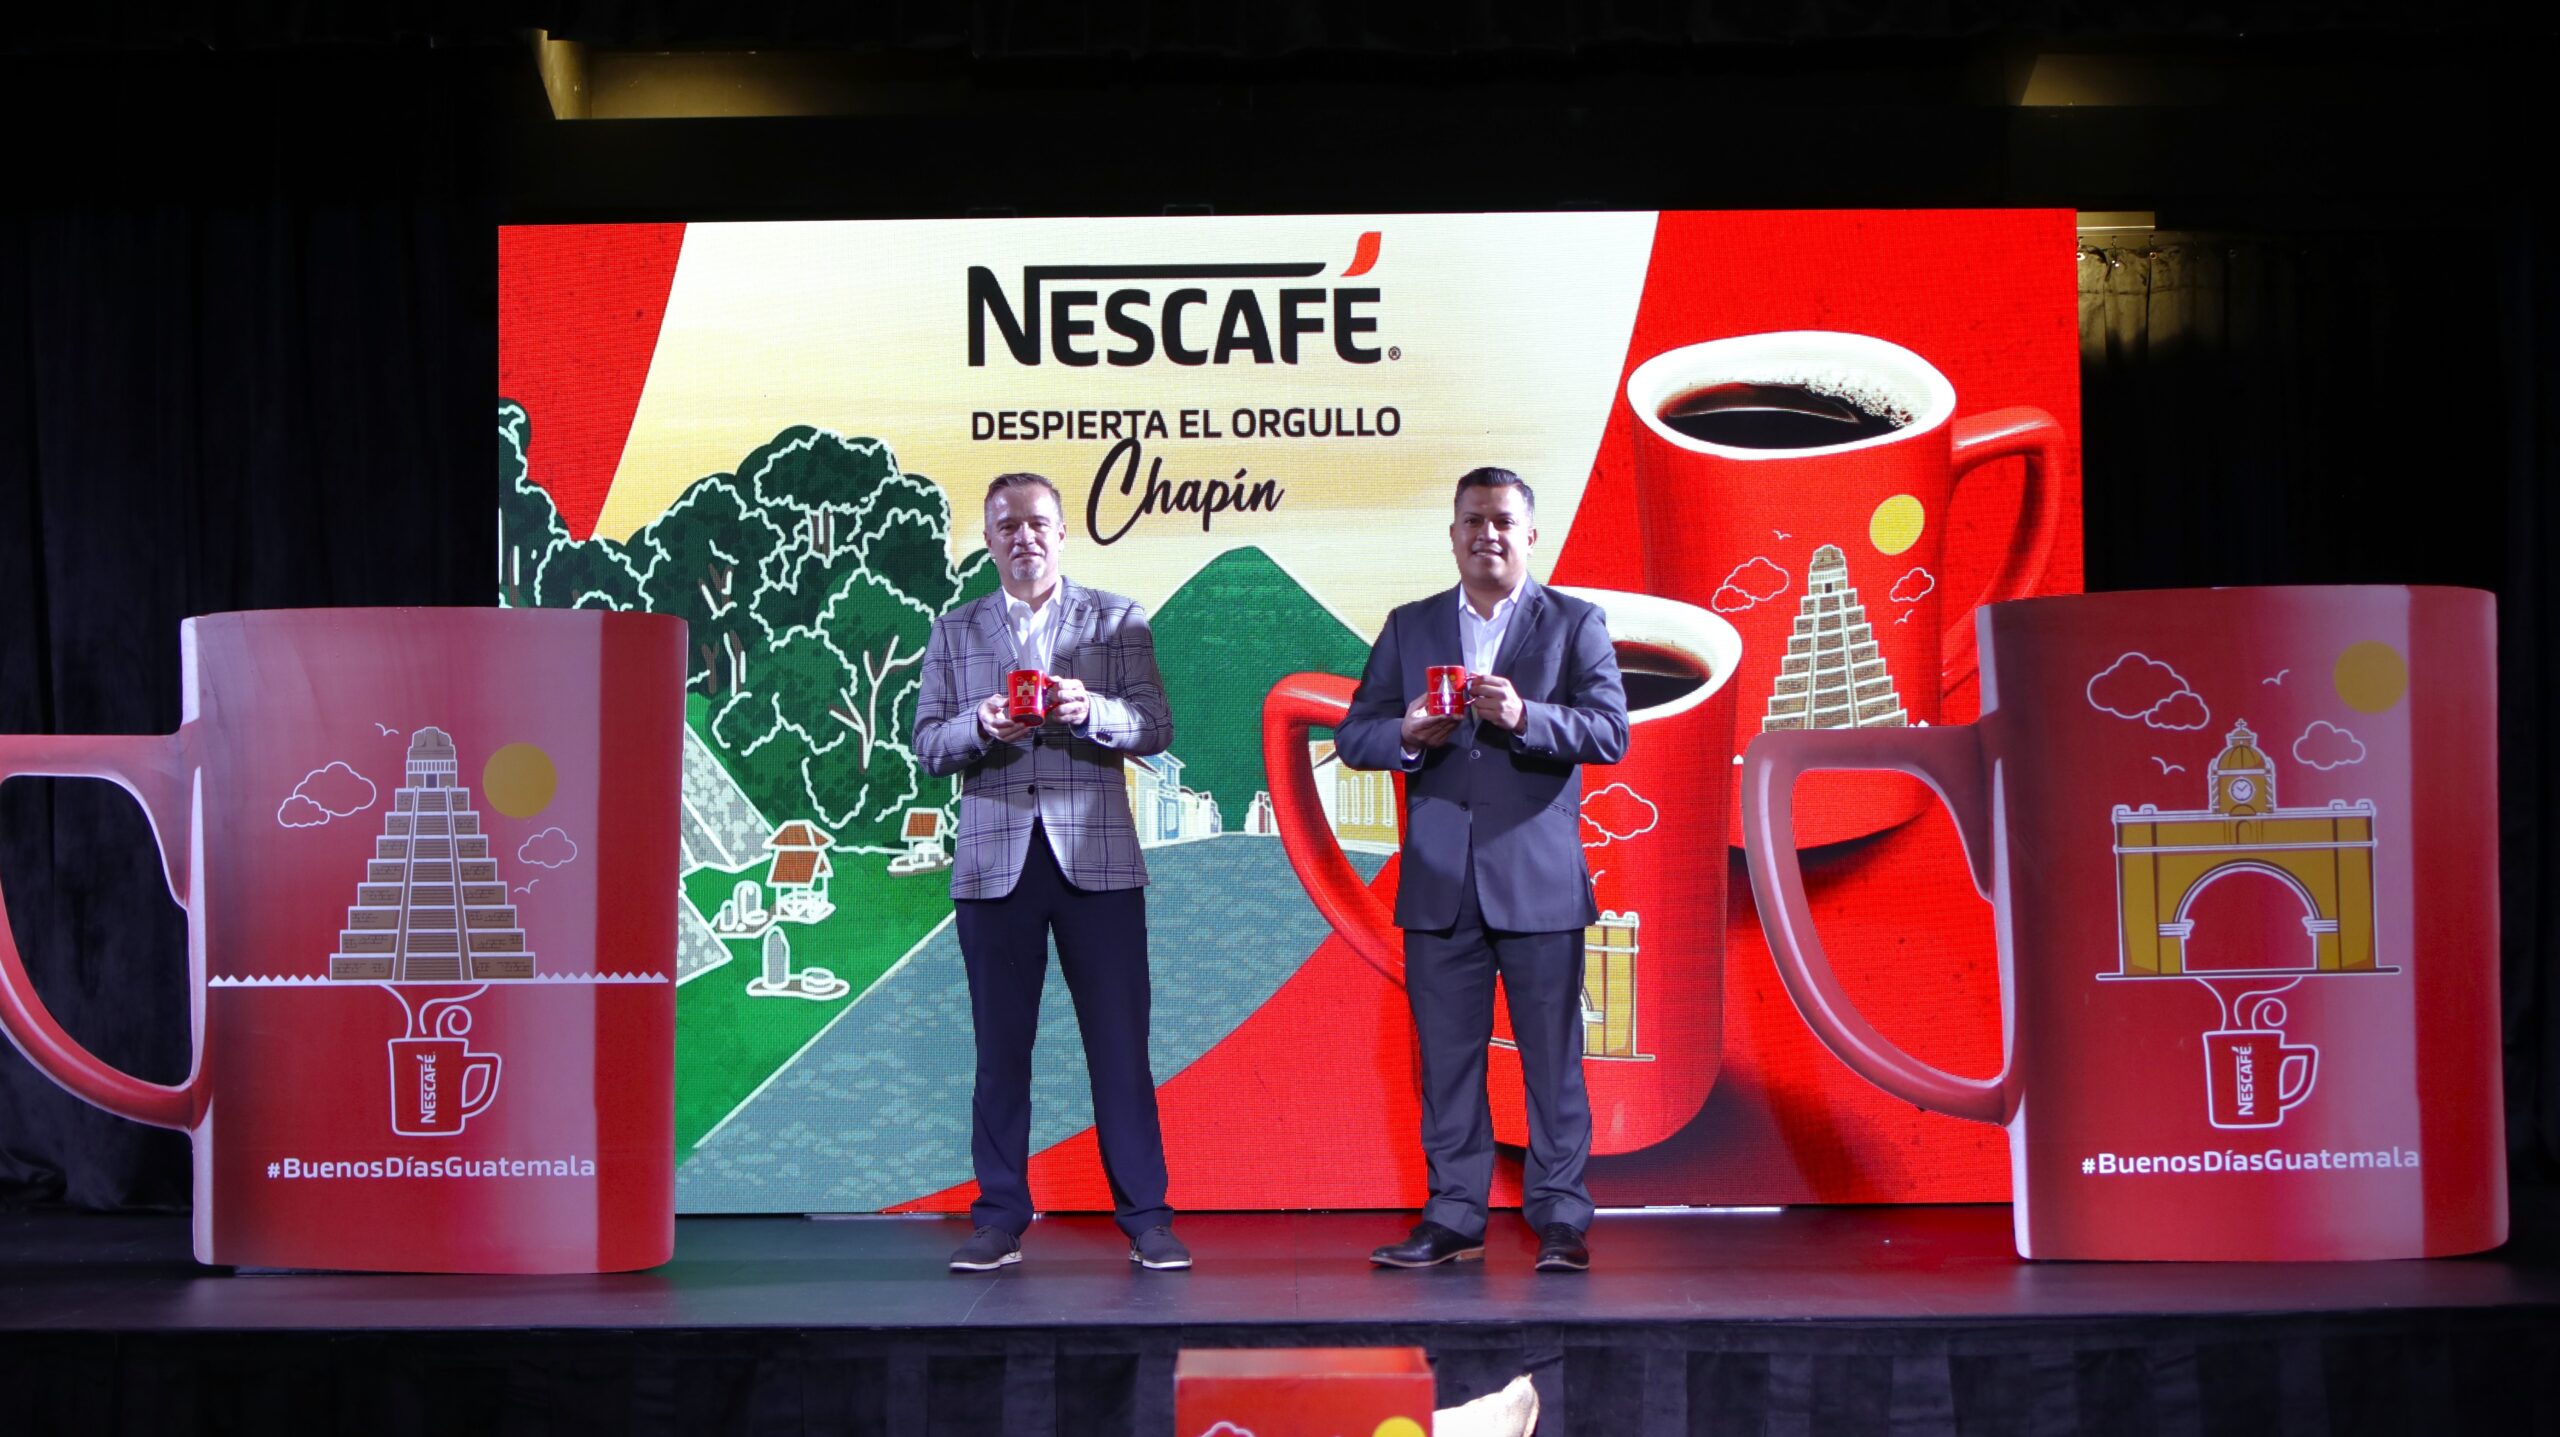 Icónica taza roja en honor a Guatemala como símbolo de celebración y orgullo chapín en cada sorbo de Nescafé